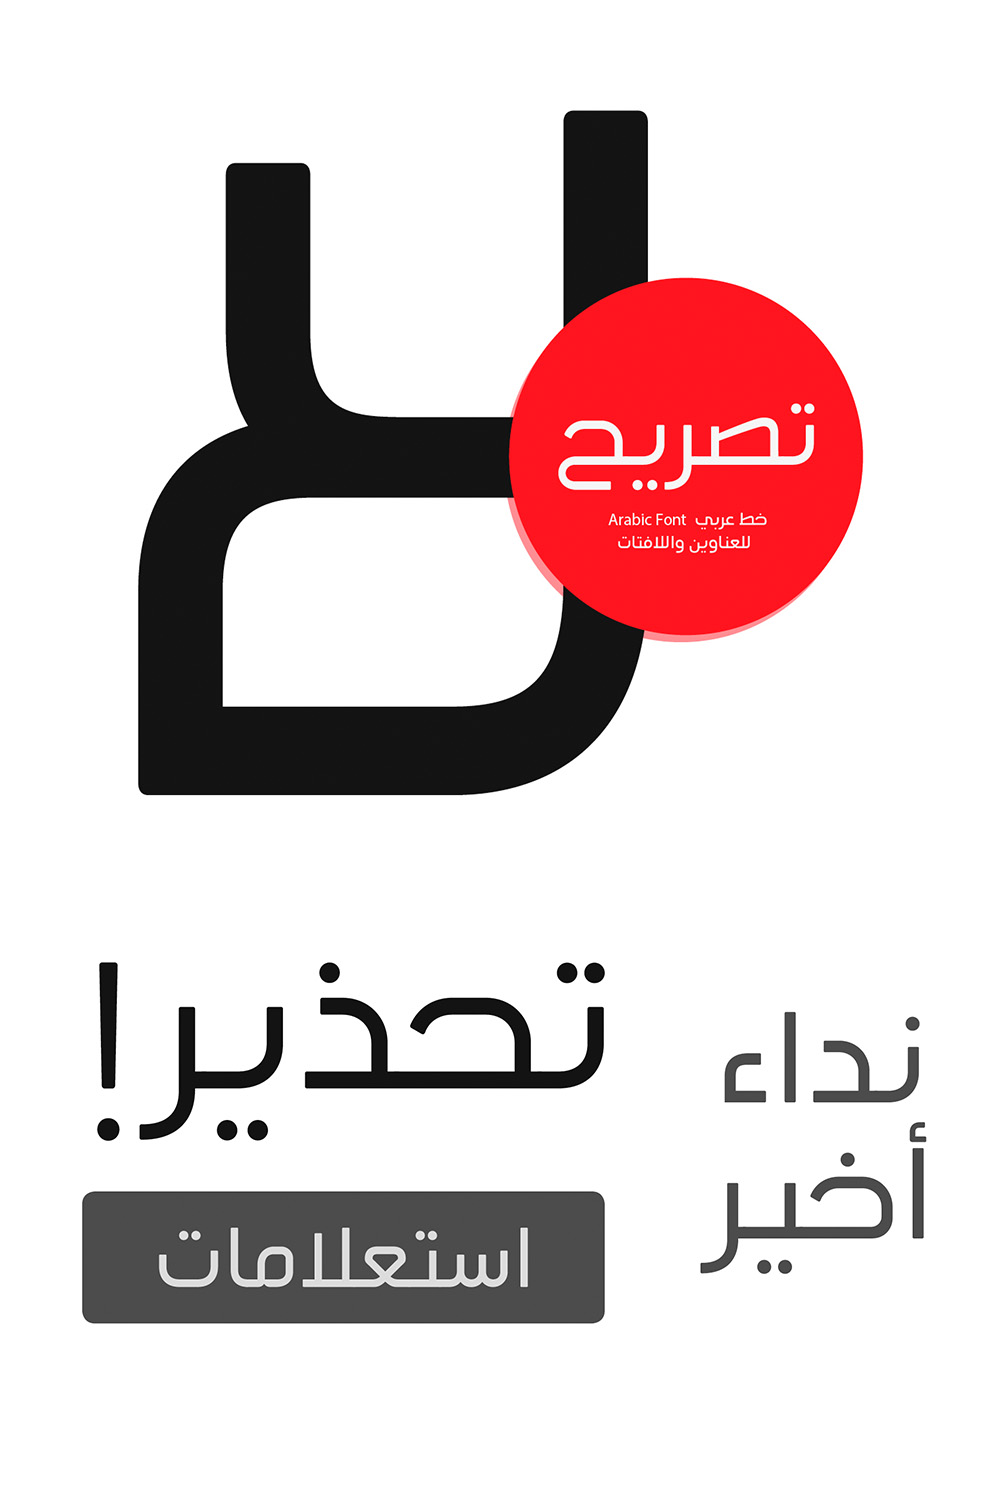 Tasreeh - Arabic Font pinterest image.